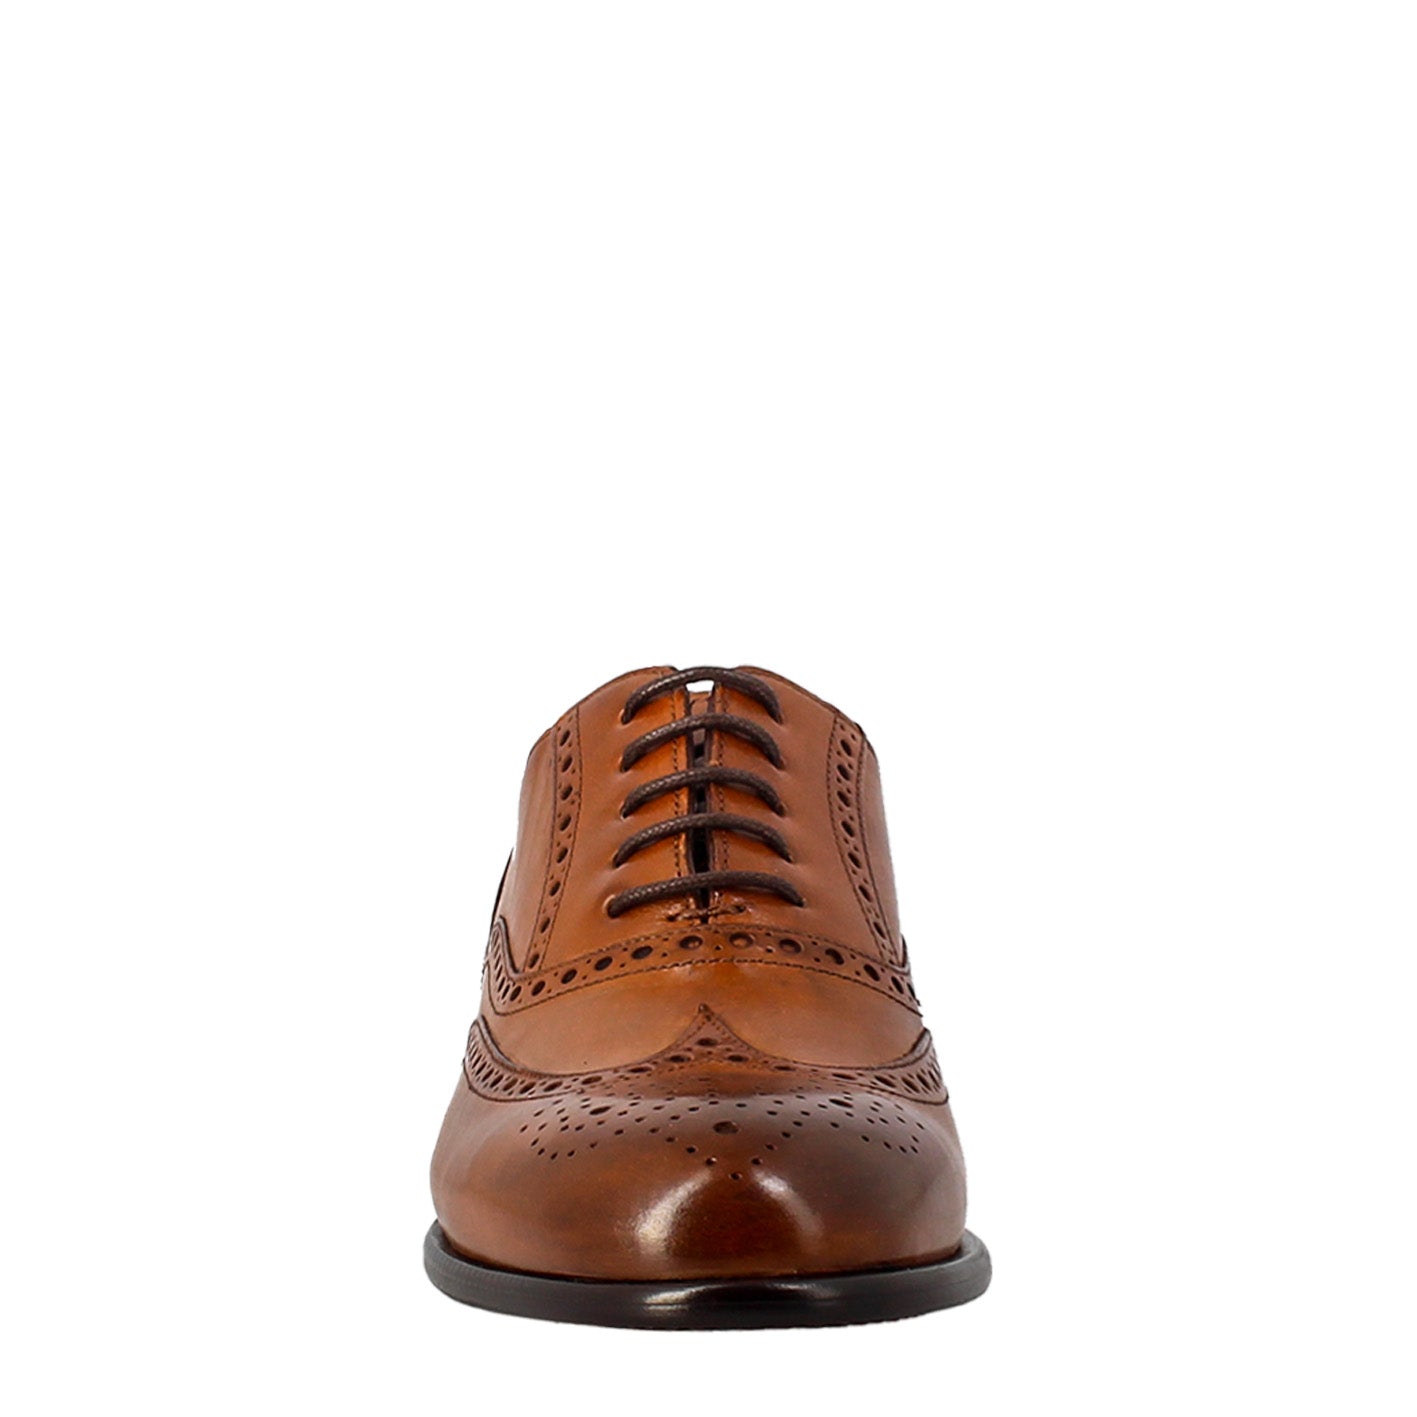 Men's elegant brown leather oxford brogue